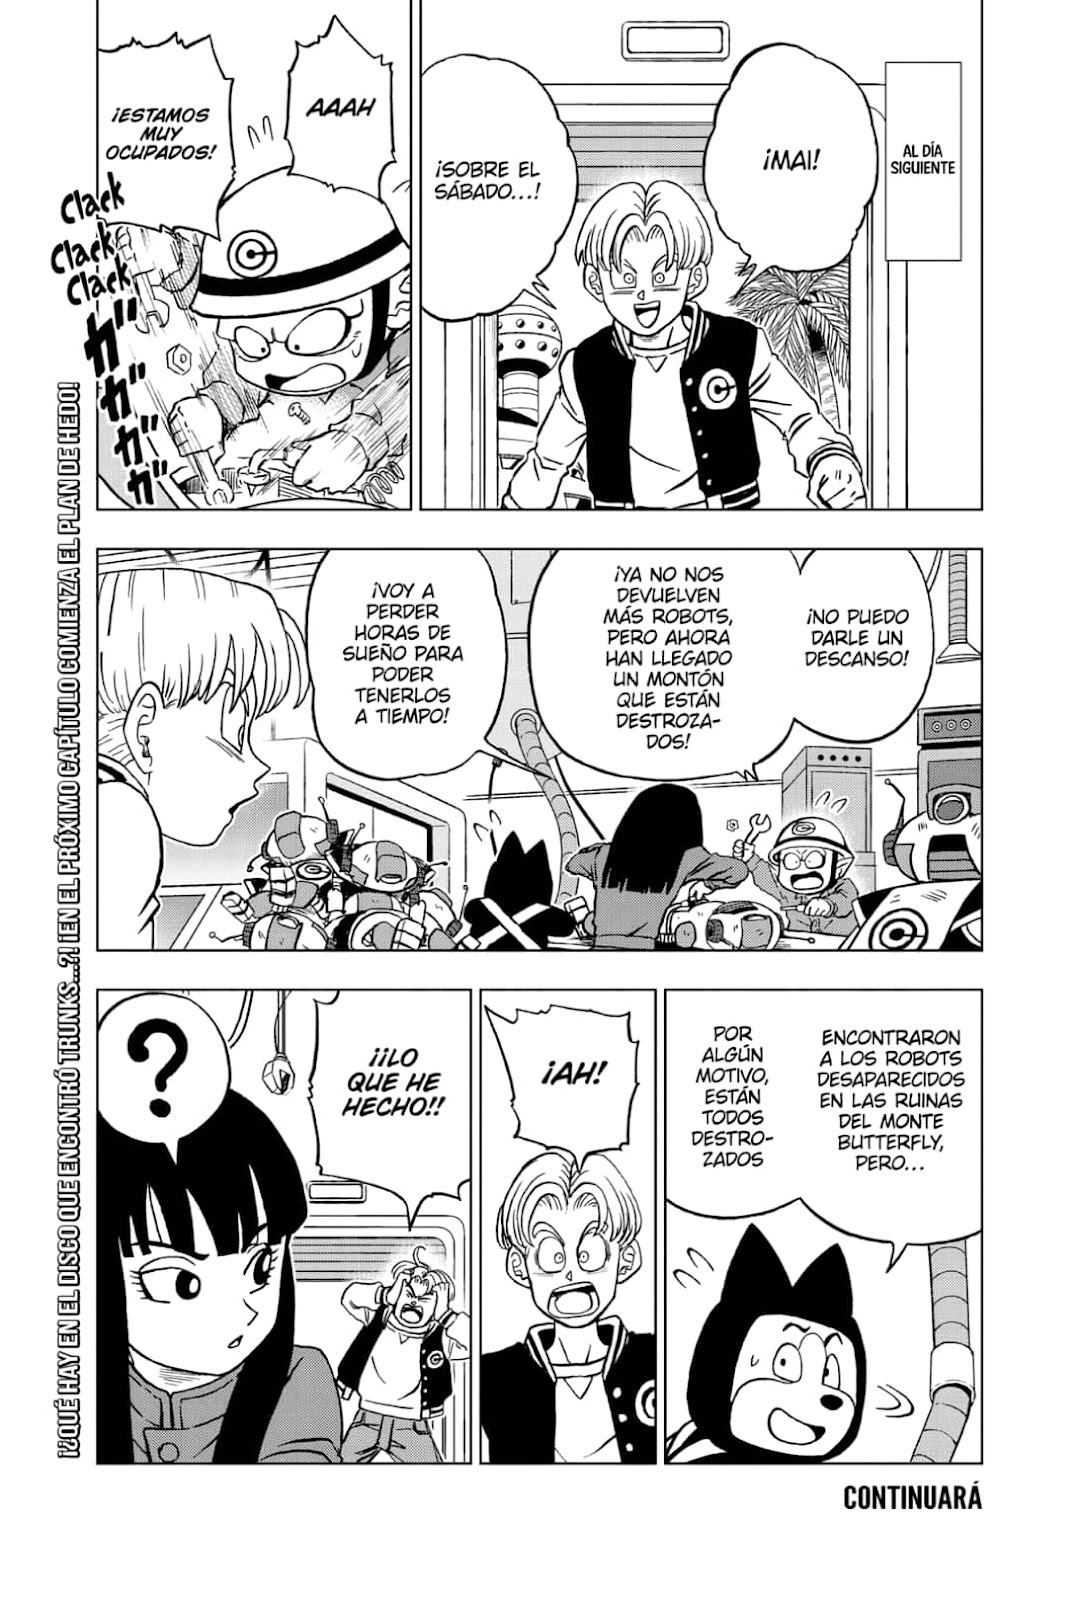 Capítulo 88 del manga de Dragon Ball Super presentó un homenaje a opening  de Dragon Ball Z